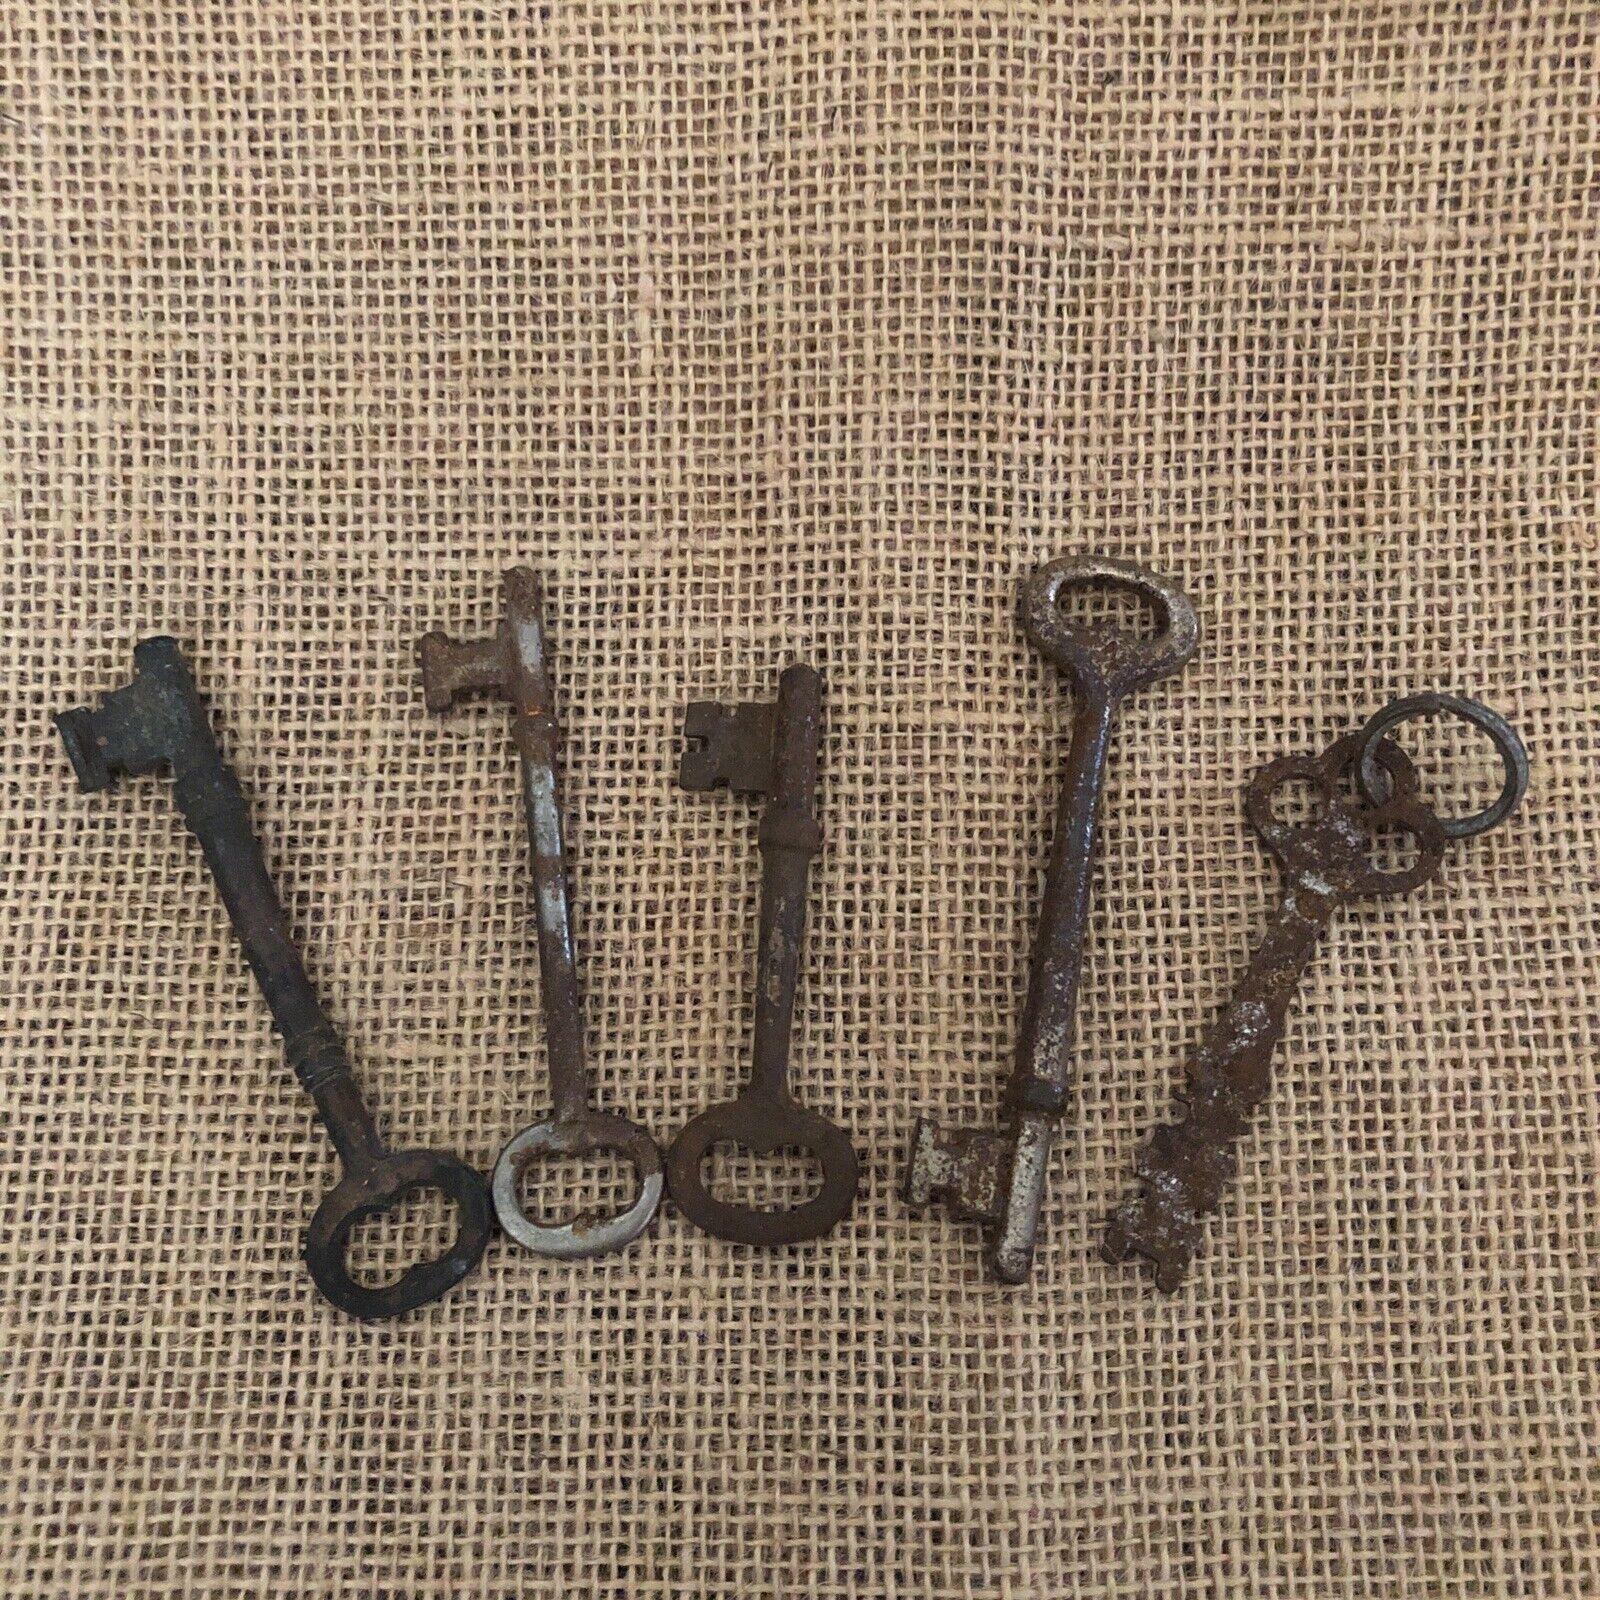 Vintage Lot of 5 Skeleton Keys For Use Arts Crafts Steampunk Rusty Crafting